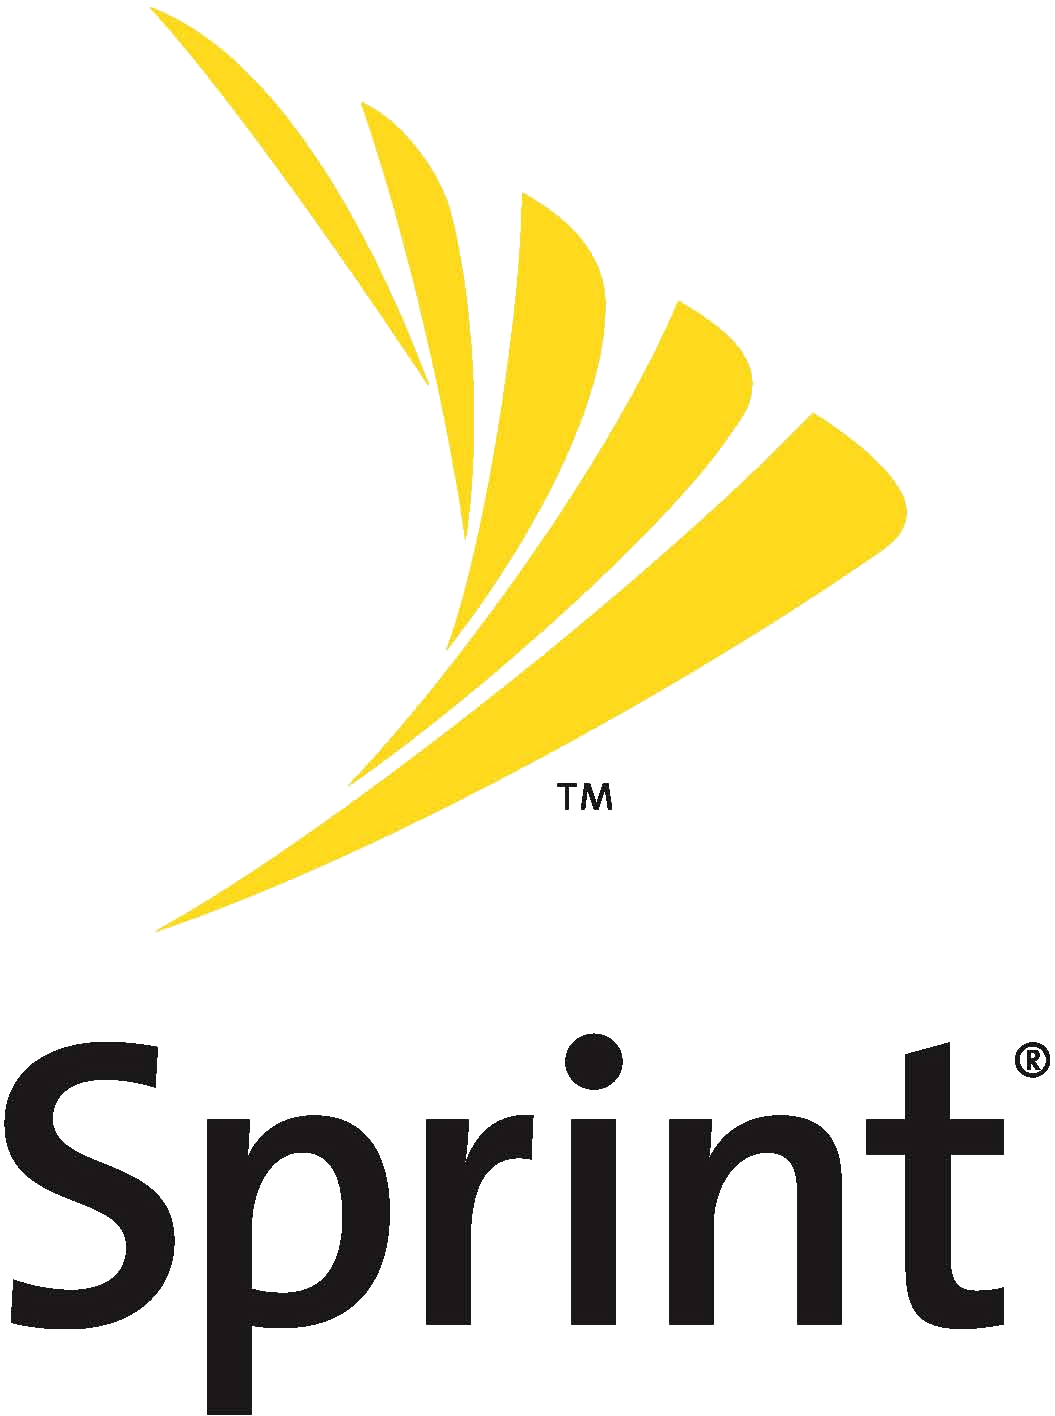 Sprint's 4G Technological Evolution